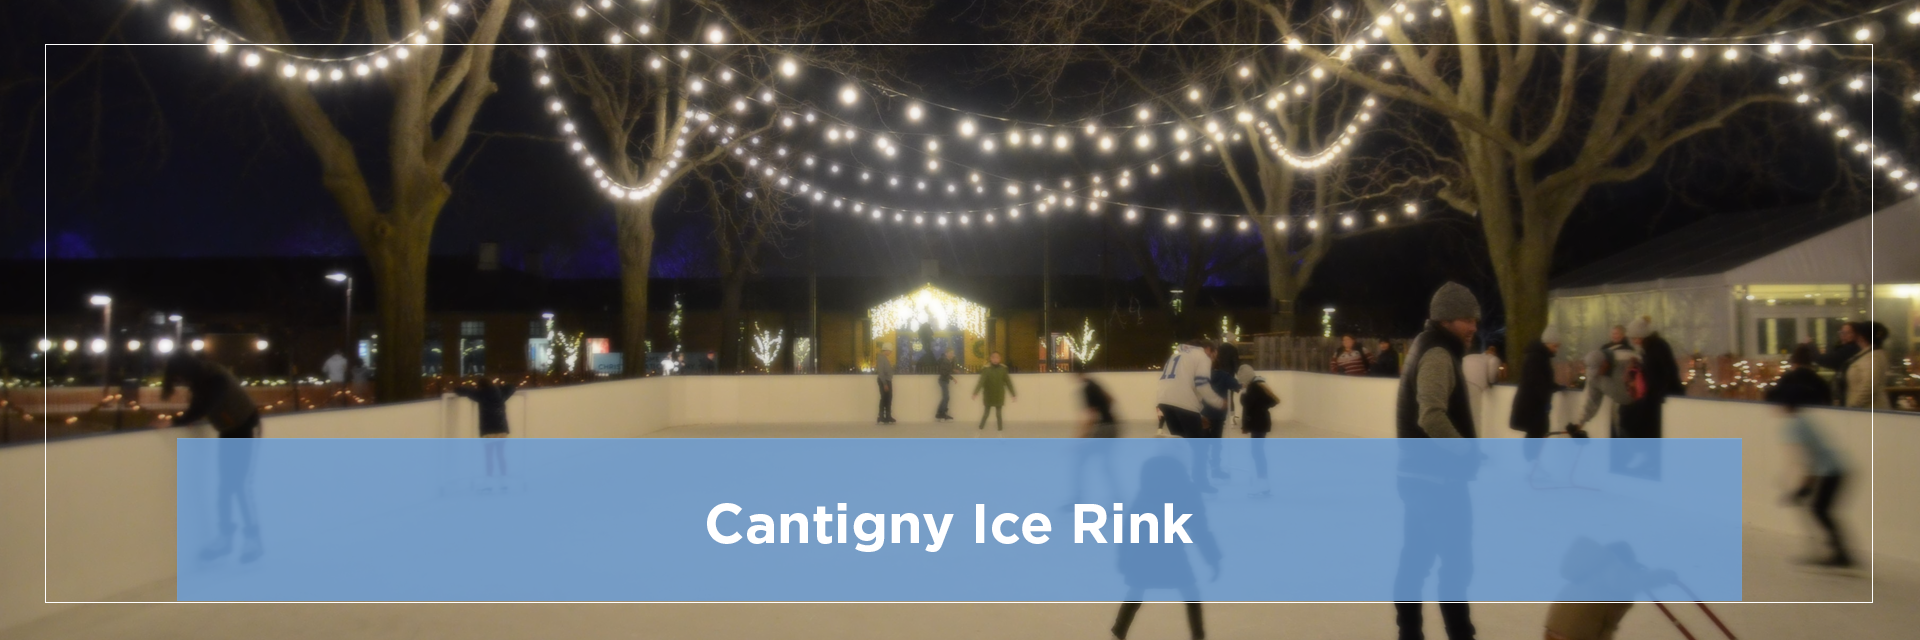 Cantigny Park Ice SkatingRink